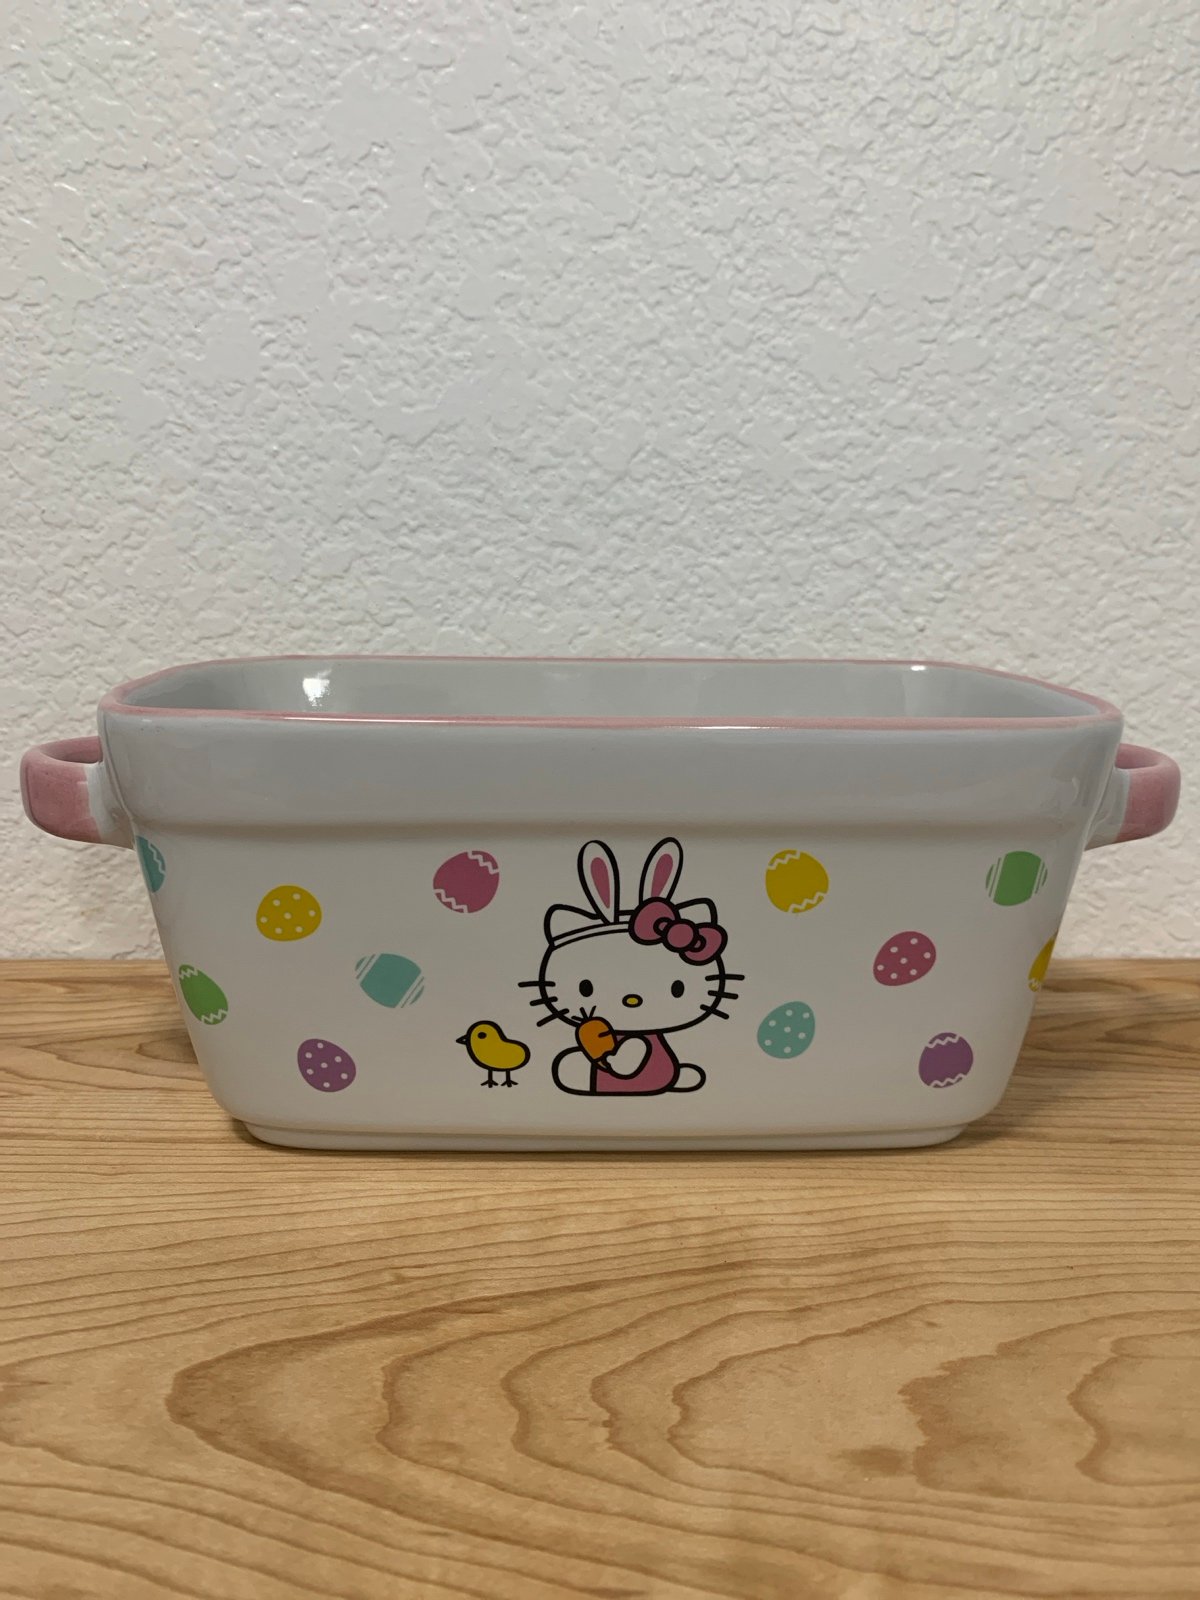 Hello Kitty Easter Bunny Spring Bread Loaf Baking Pan By Sanrio Zrike Brands 9jVgPri5o